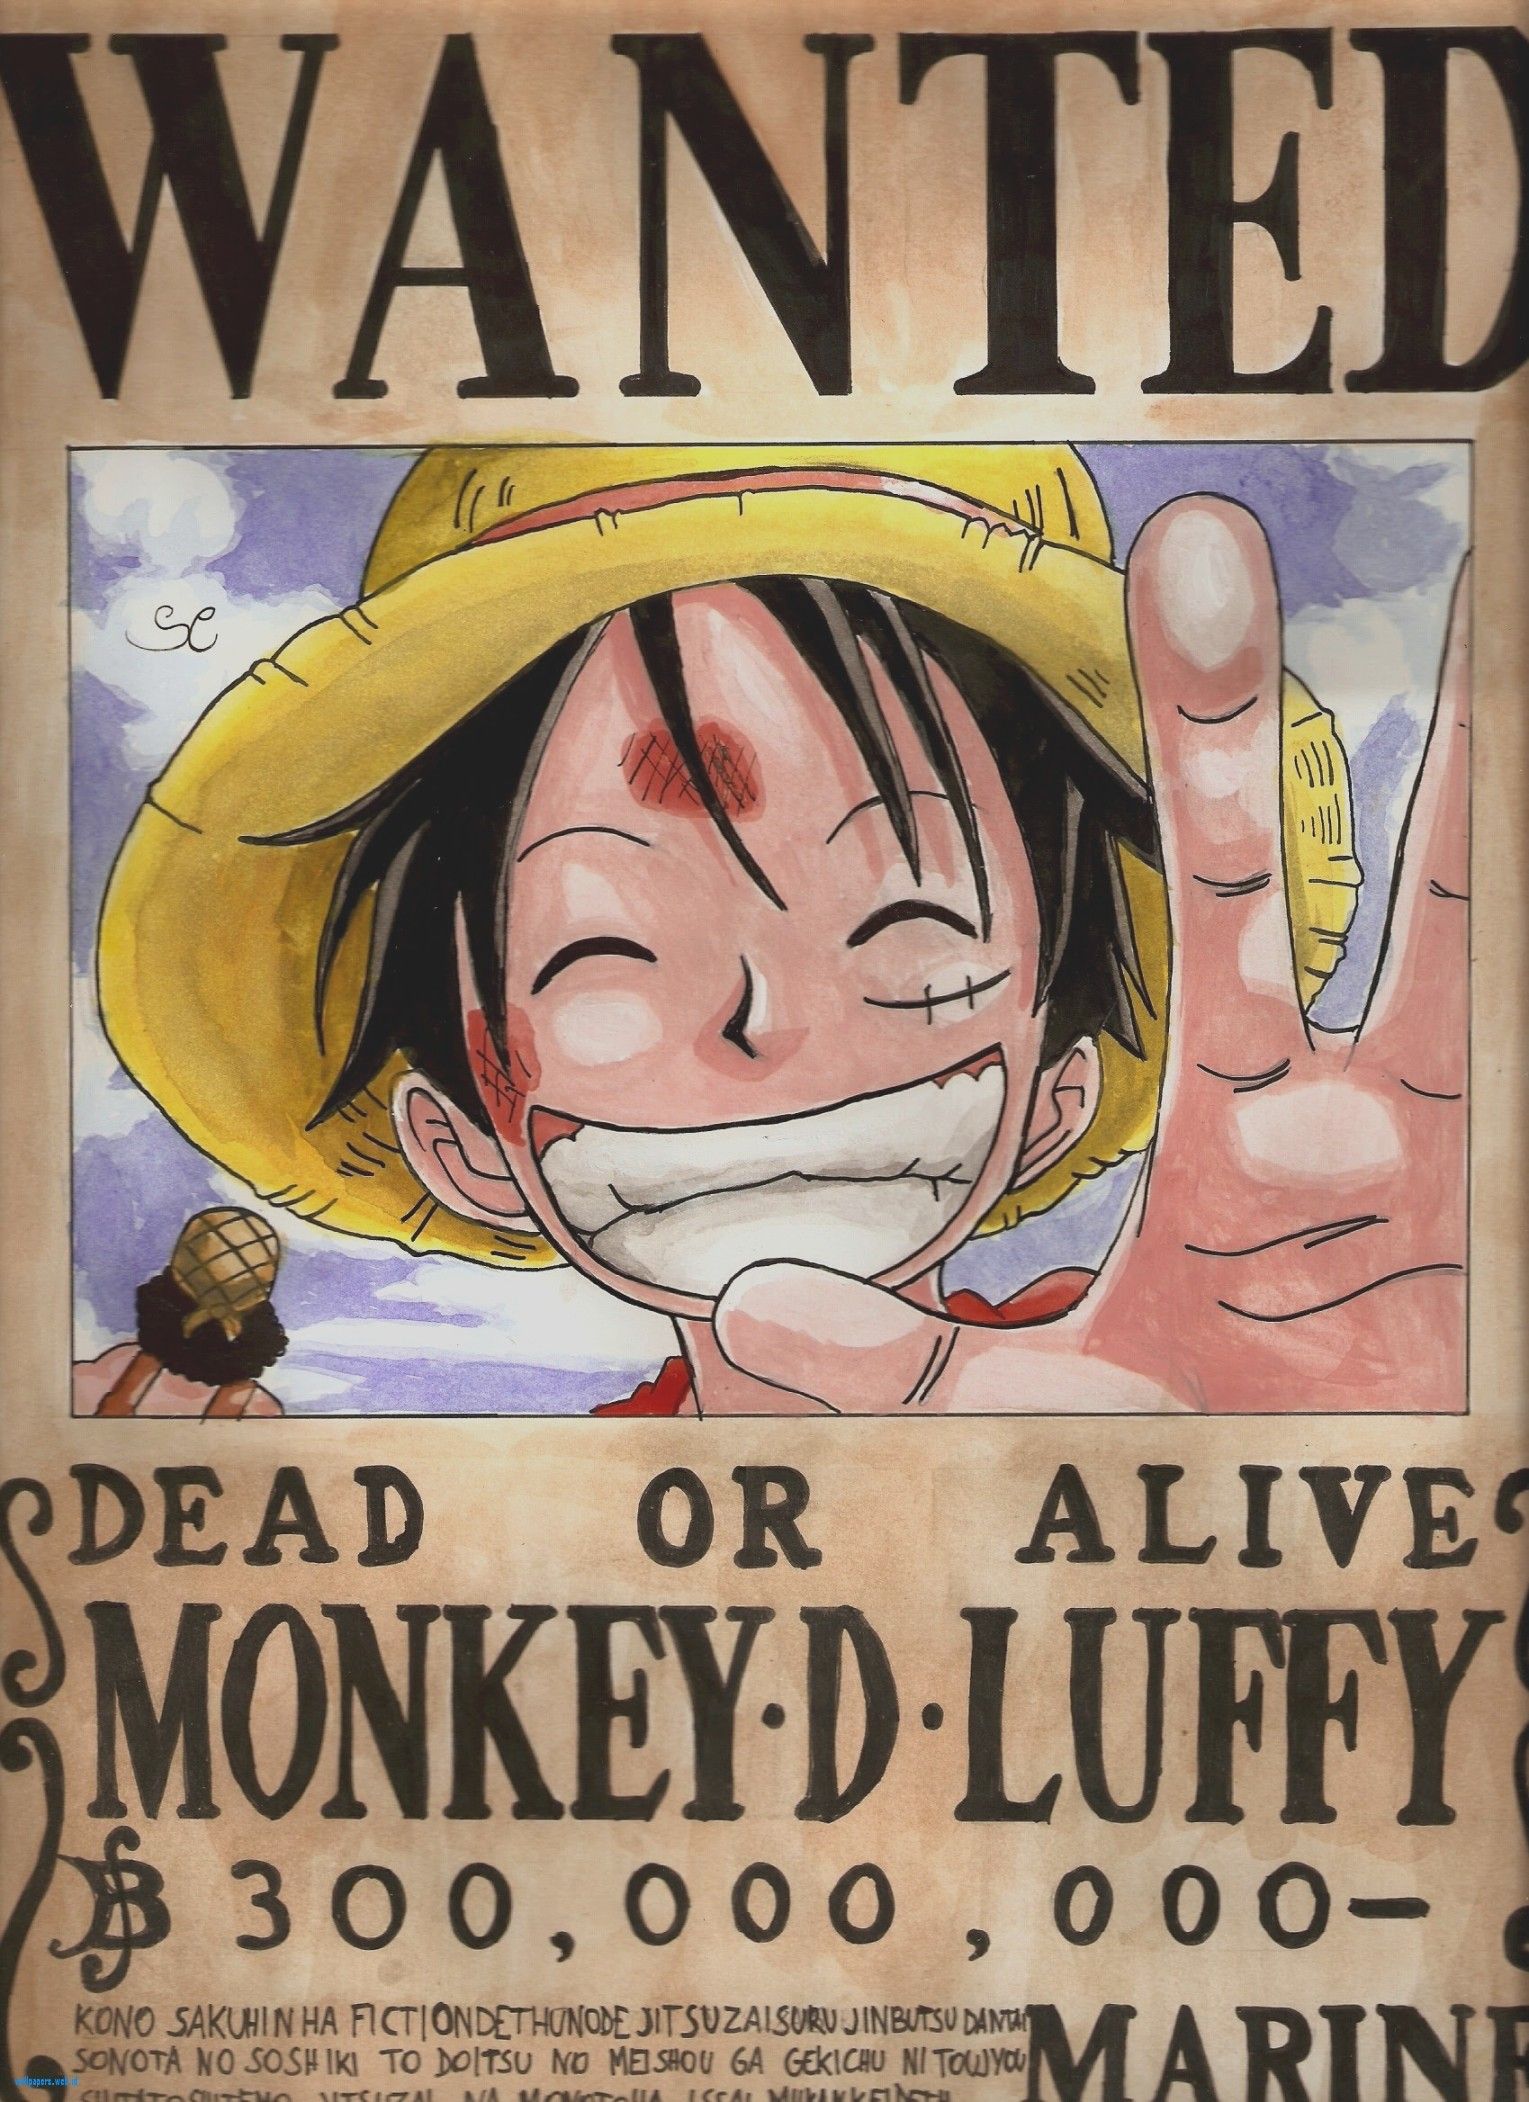 One Piece Wallpaper Wanted .pavbca.com